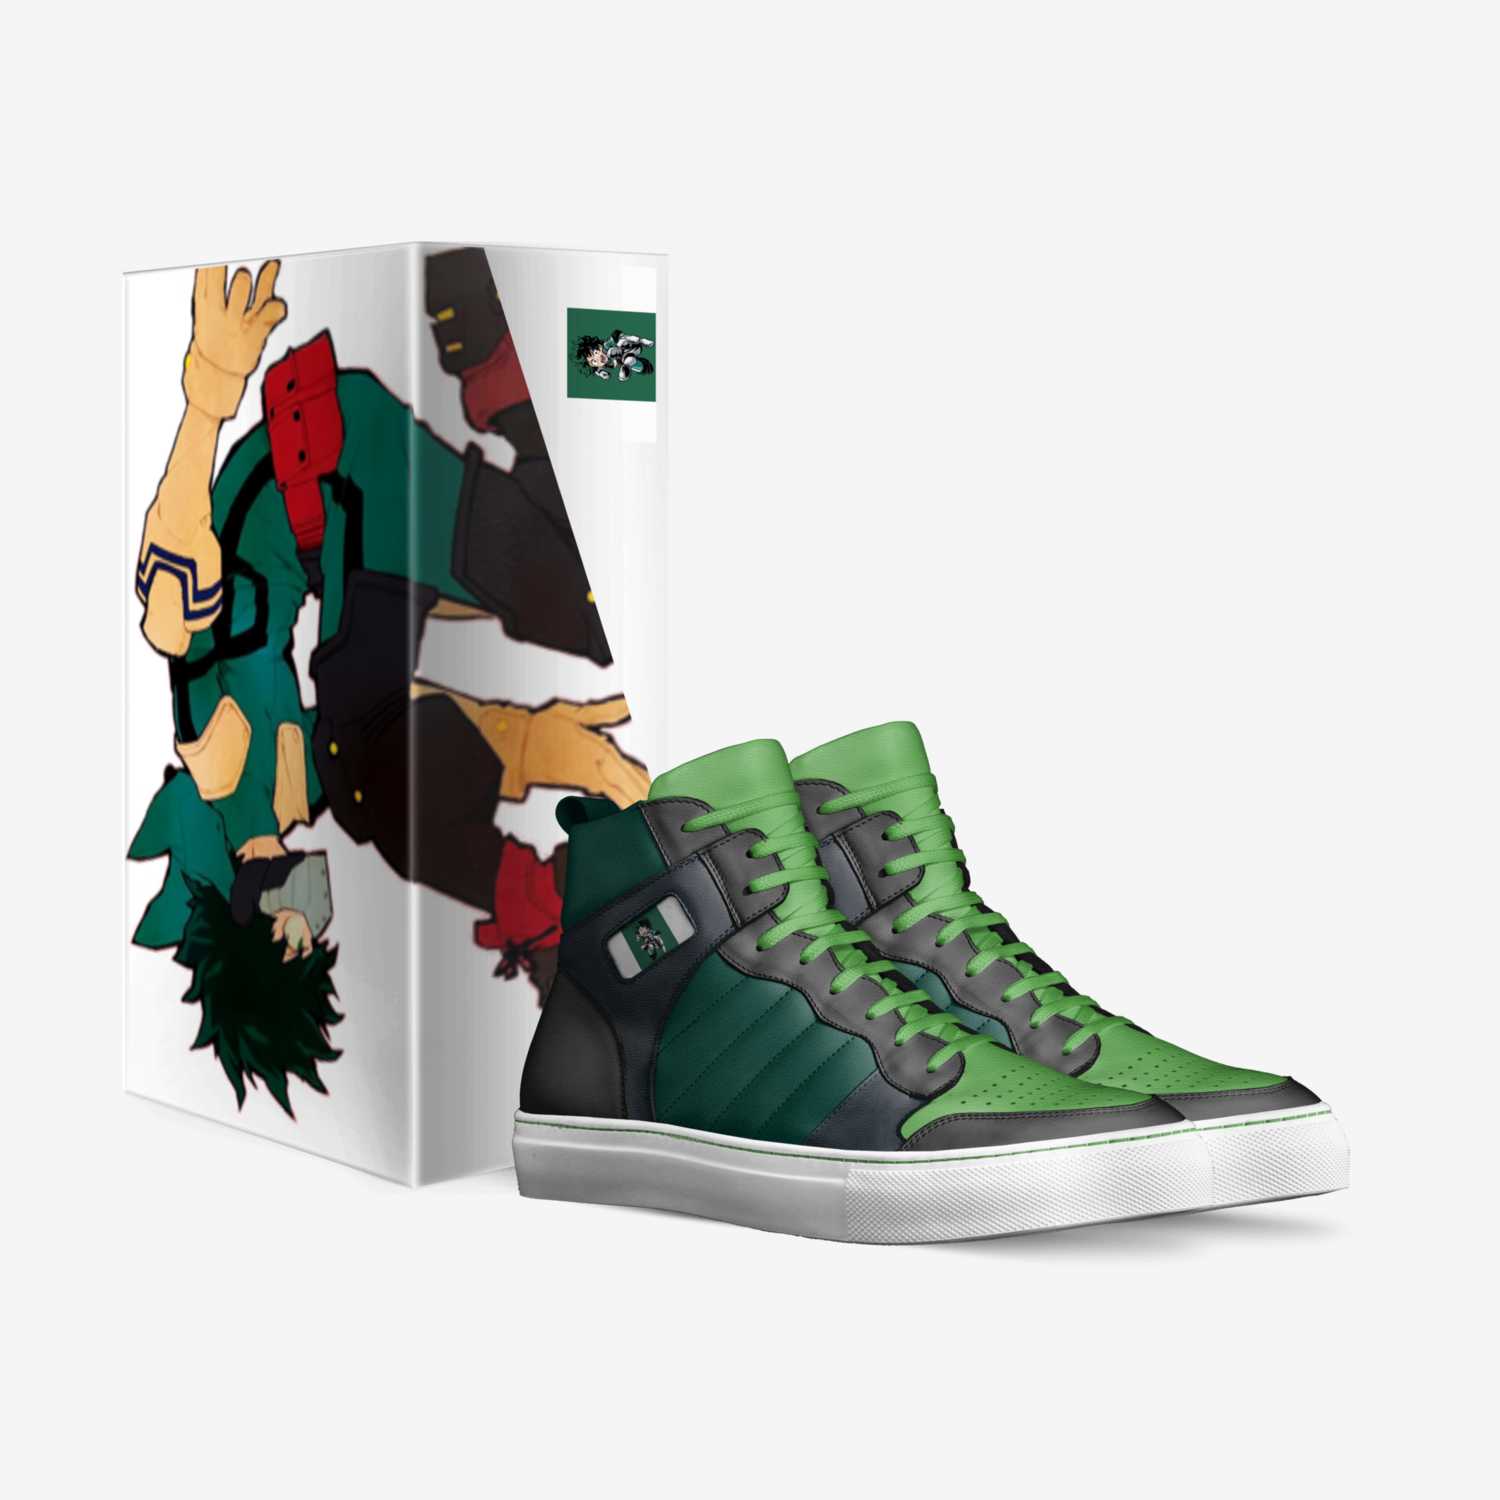 Deku custom made in Italy shoes by Leet | Box view